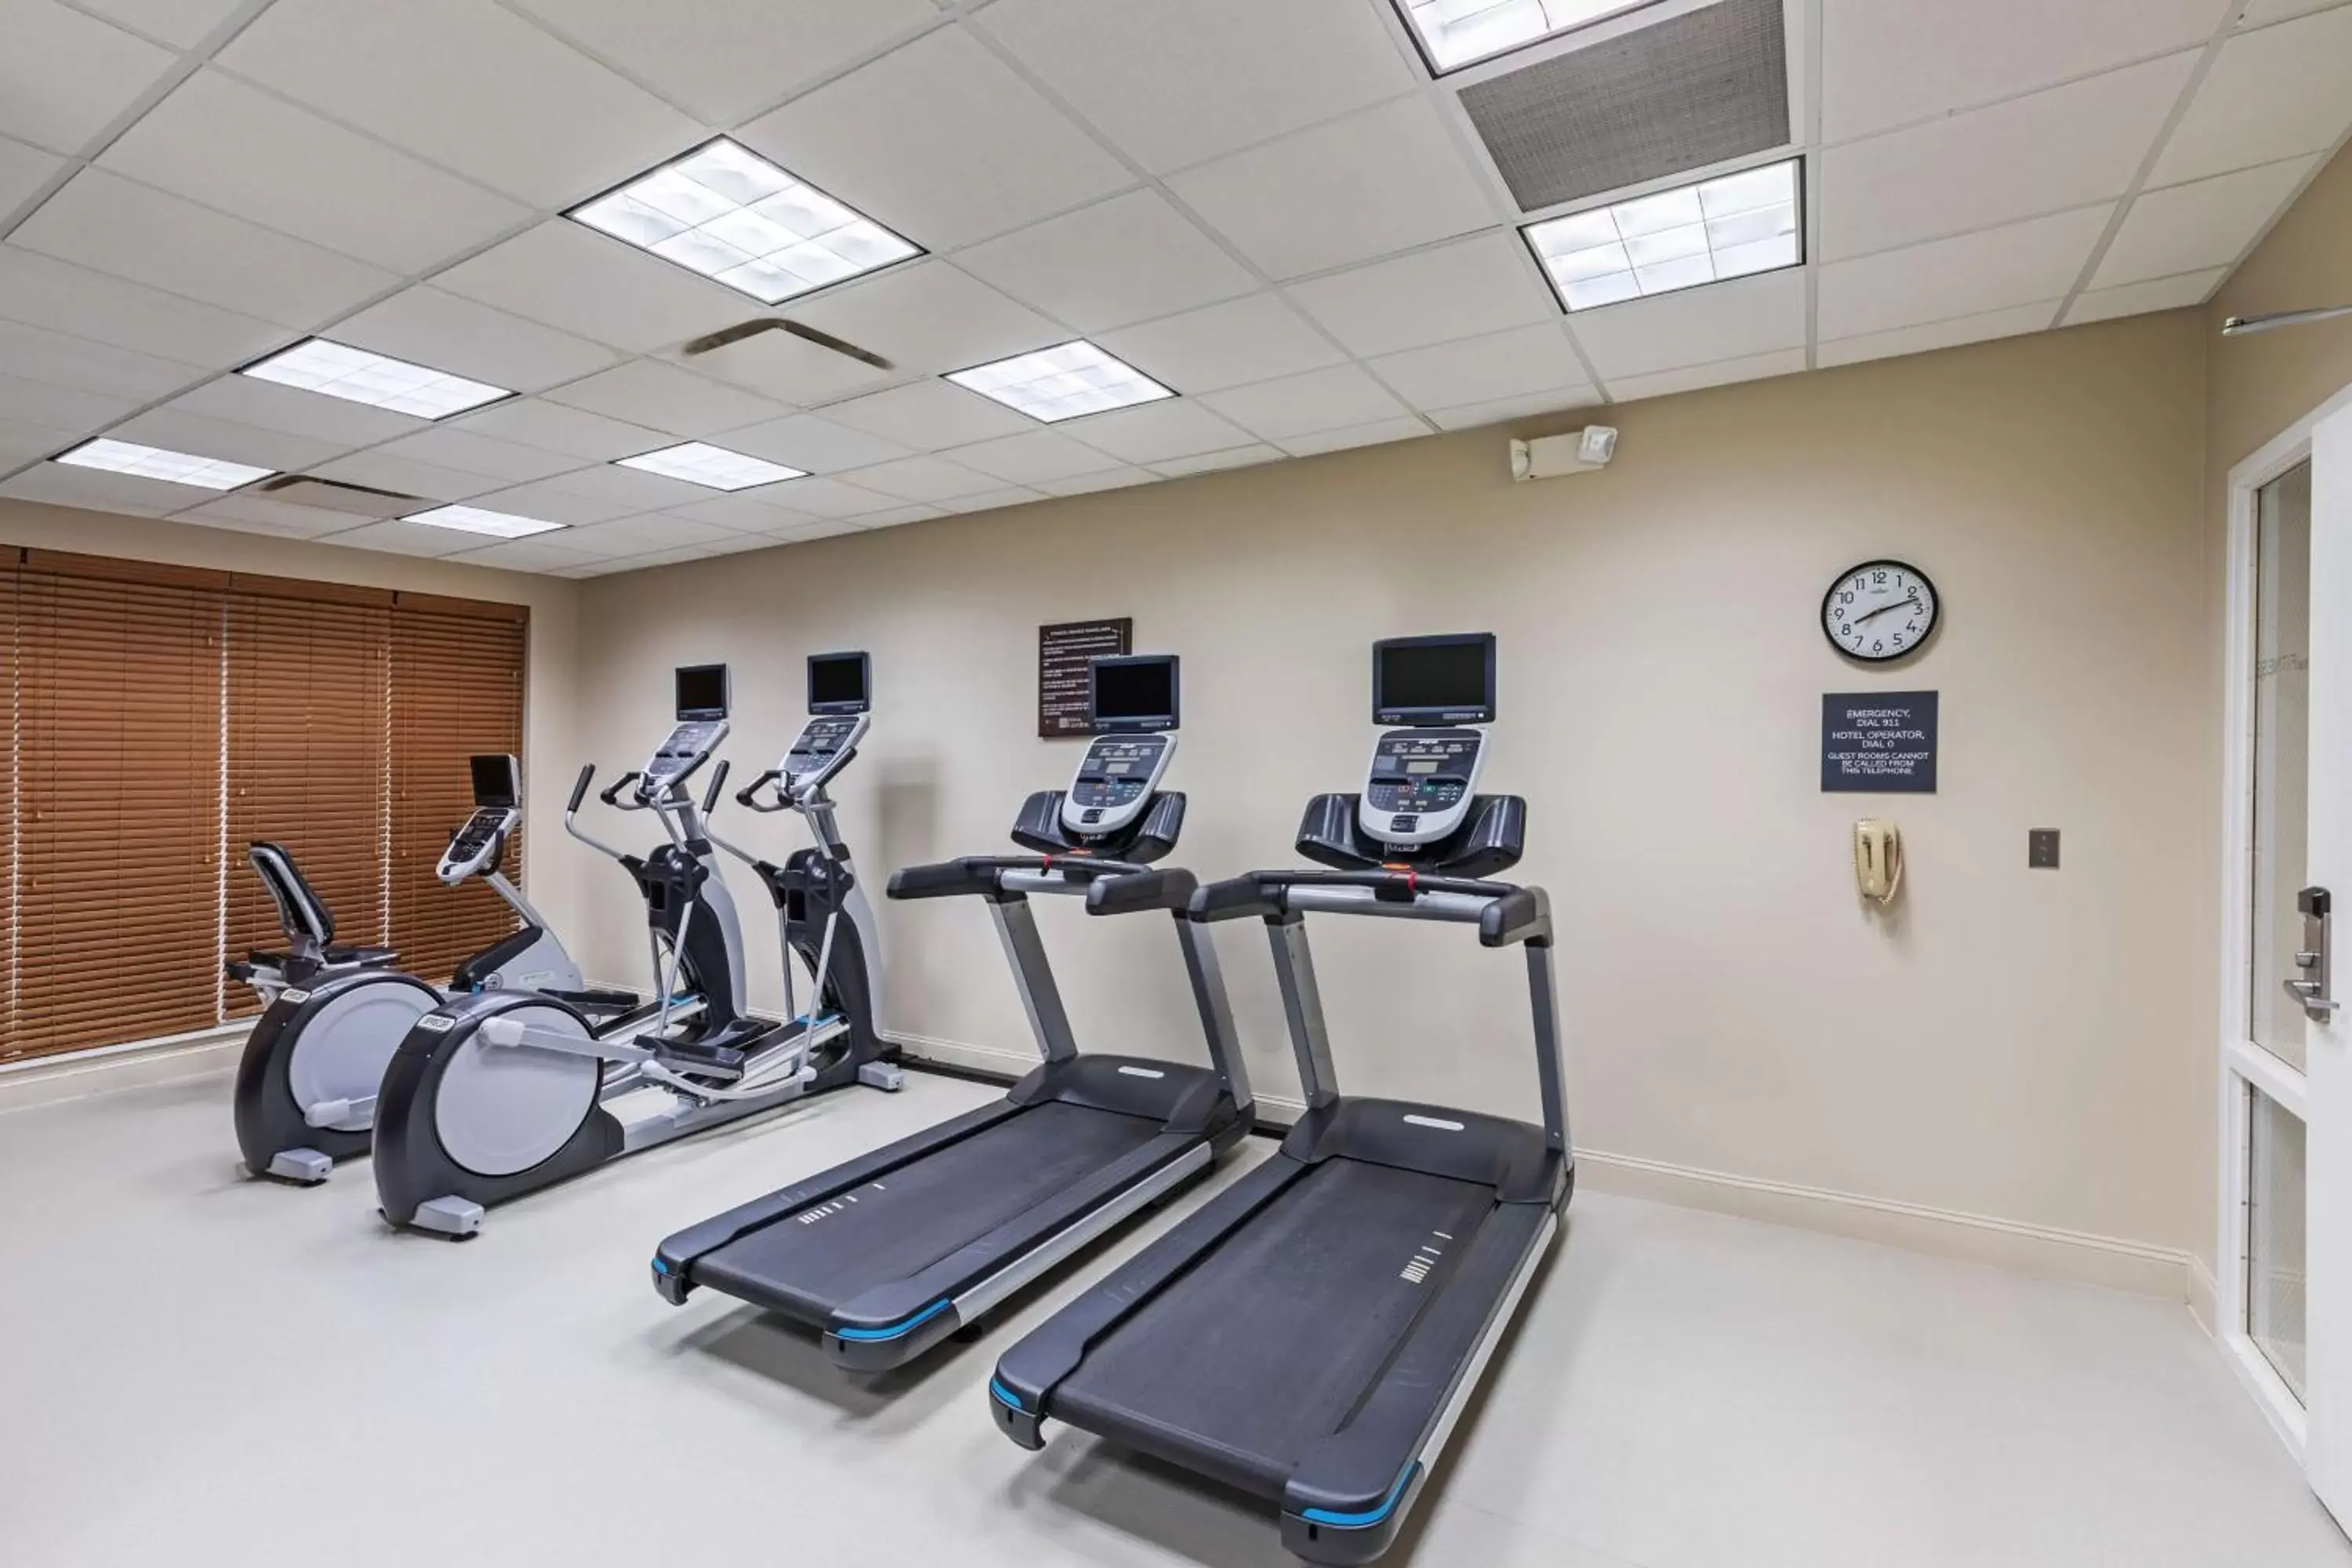 Fitness centre/facilities, Fitness Center/Facilities in Hilton Garden Inn Aiken